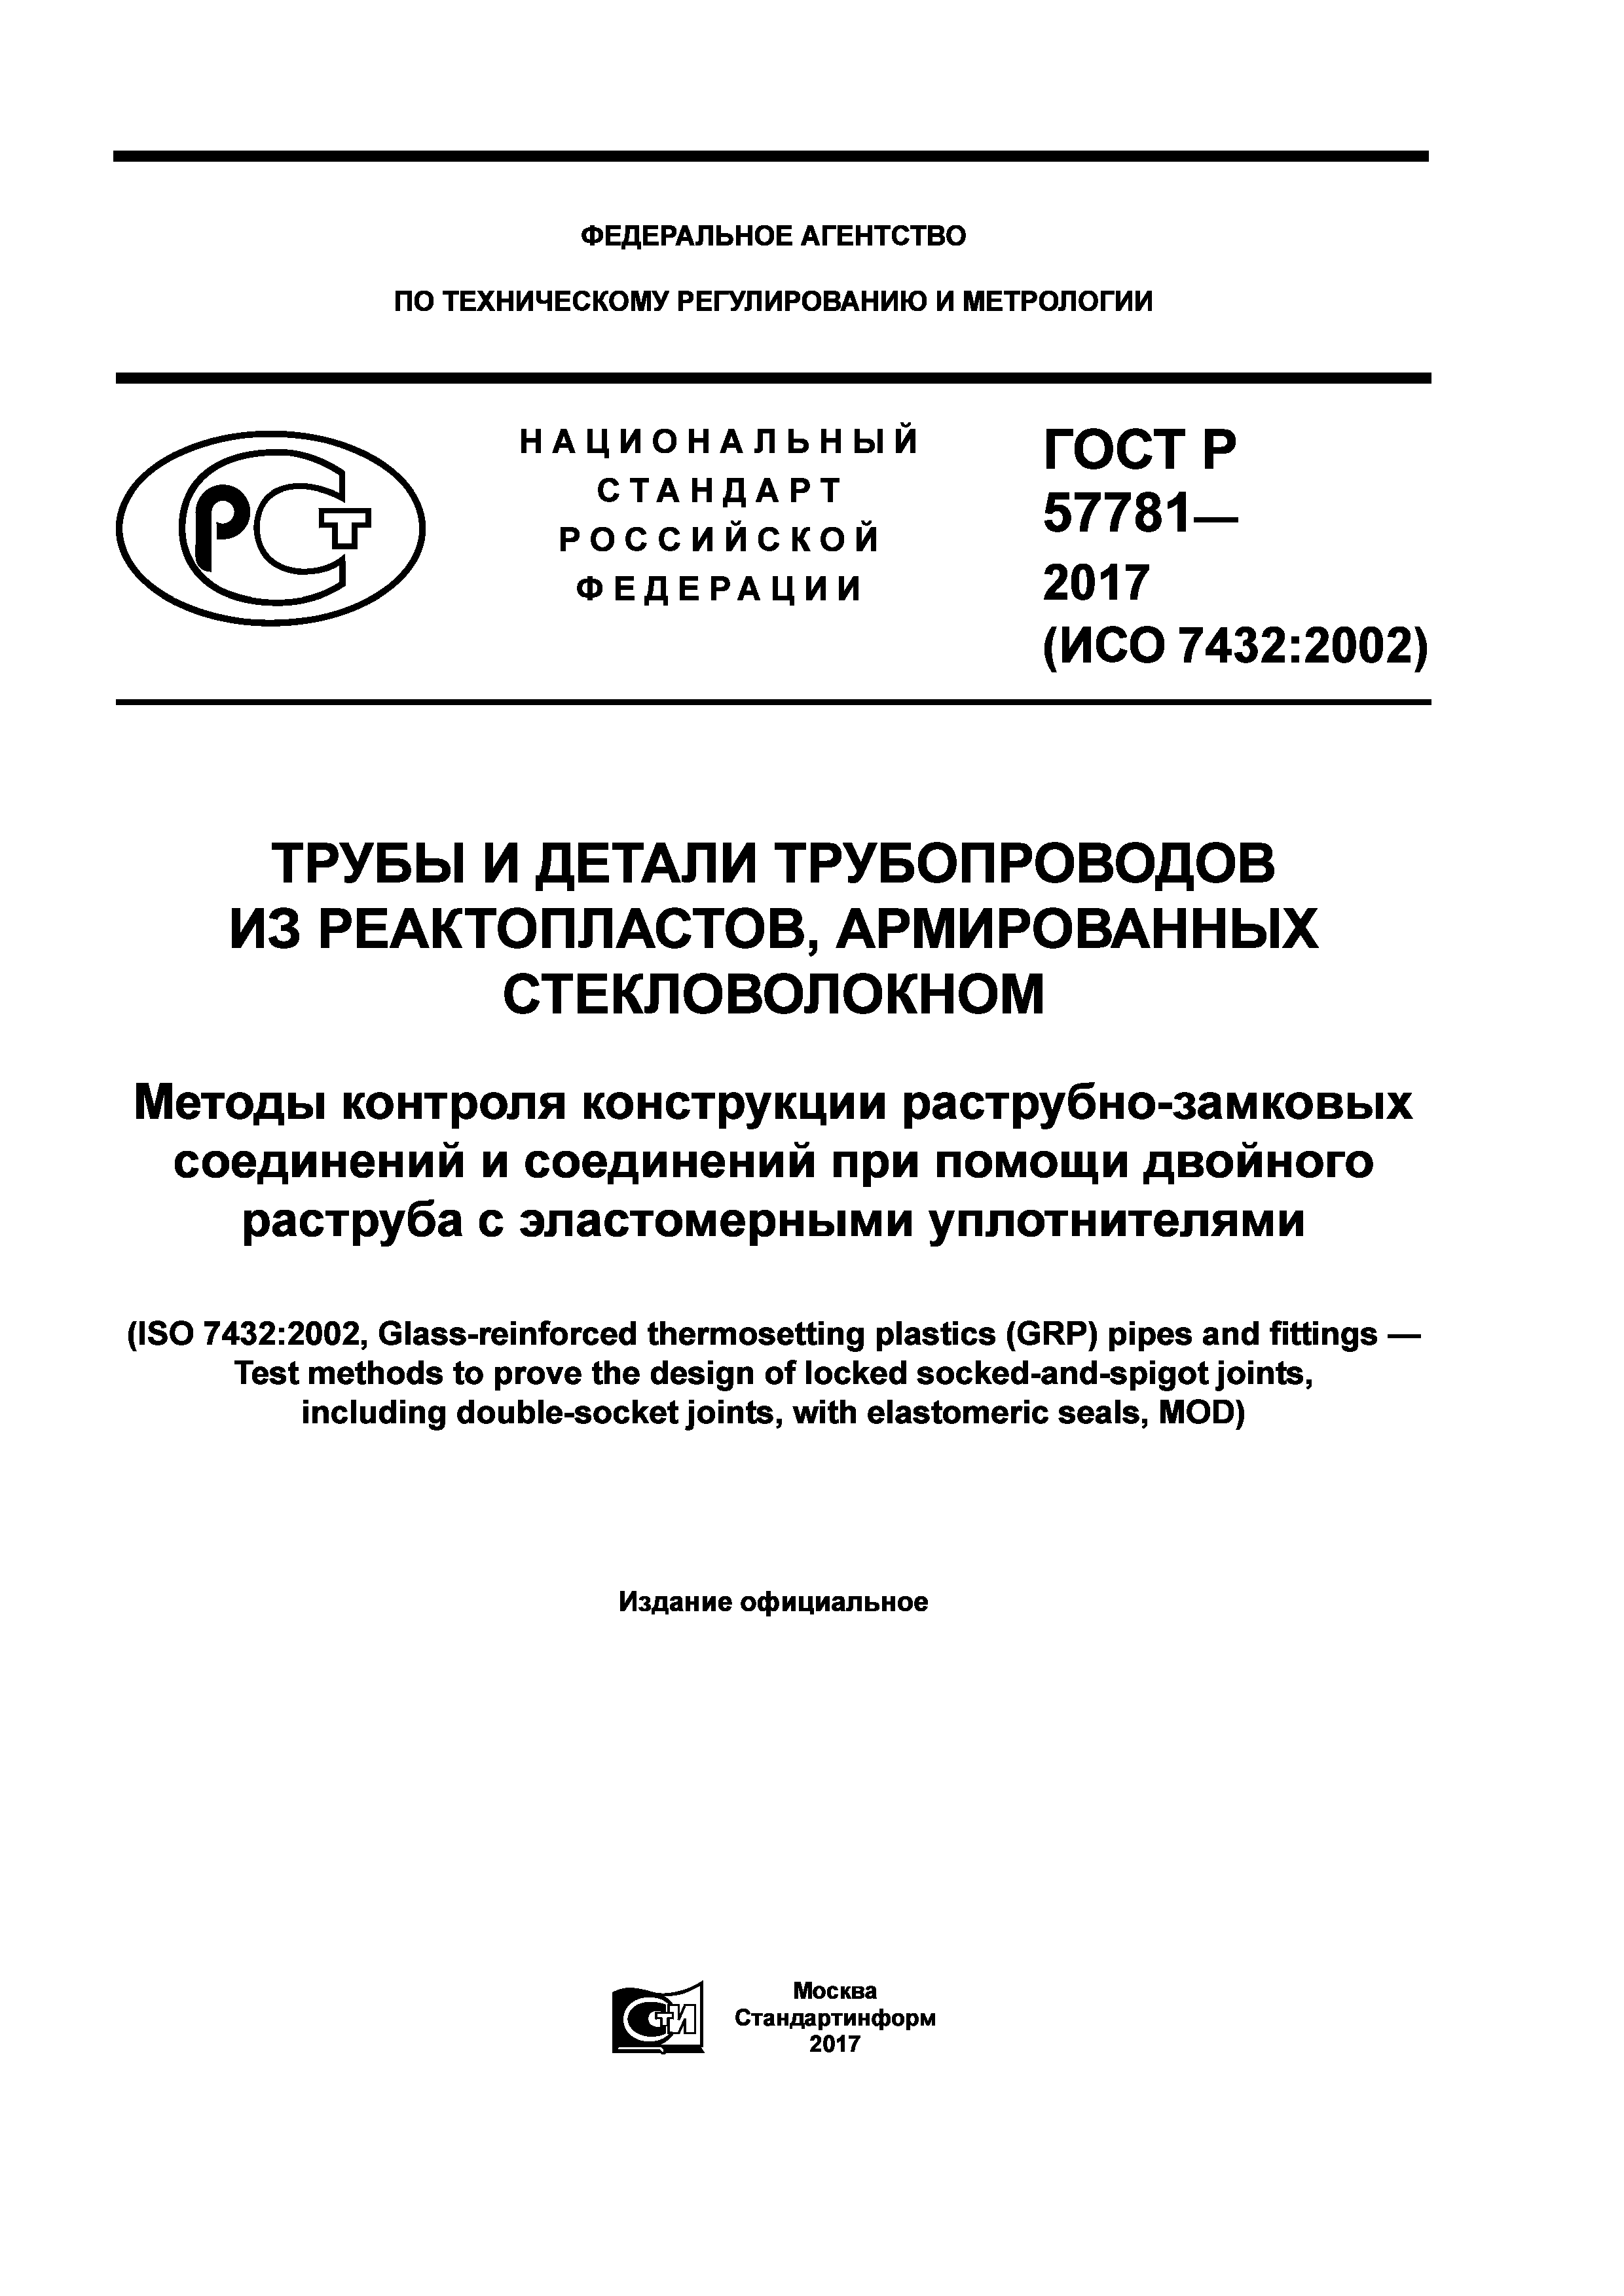 ГОСТ Р 57781-2017